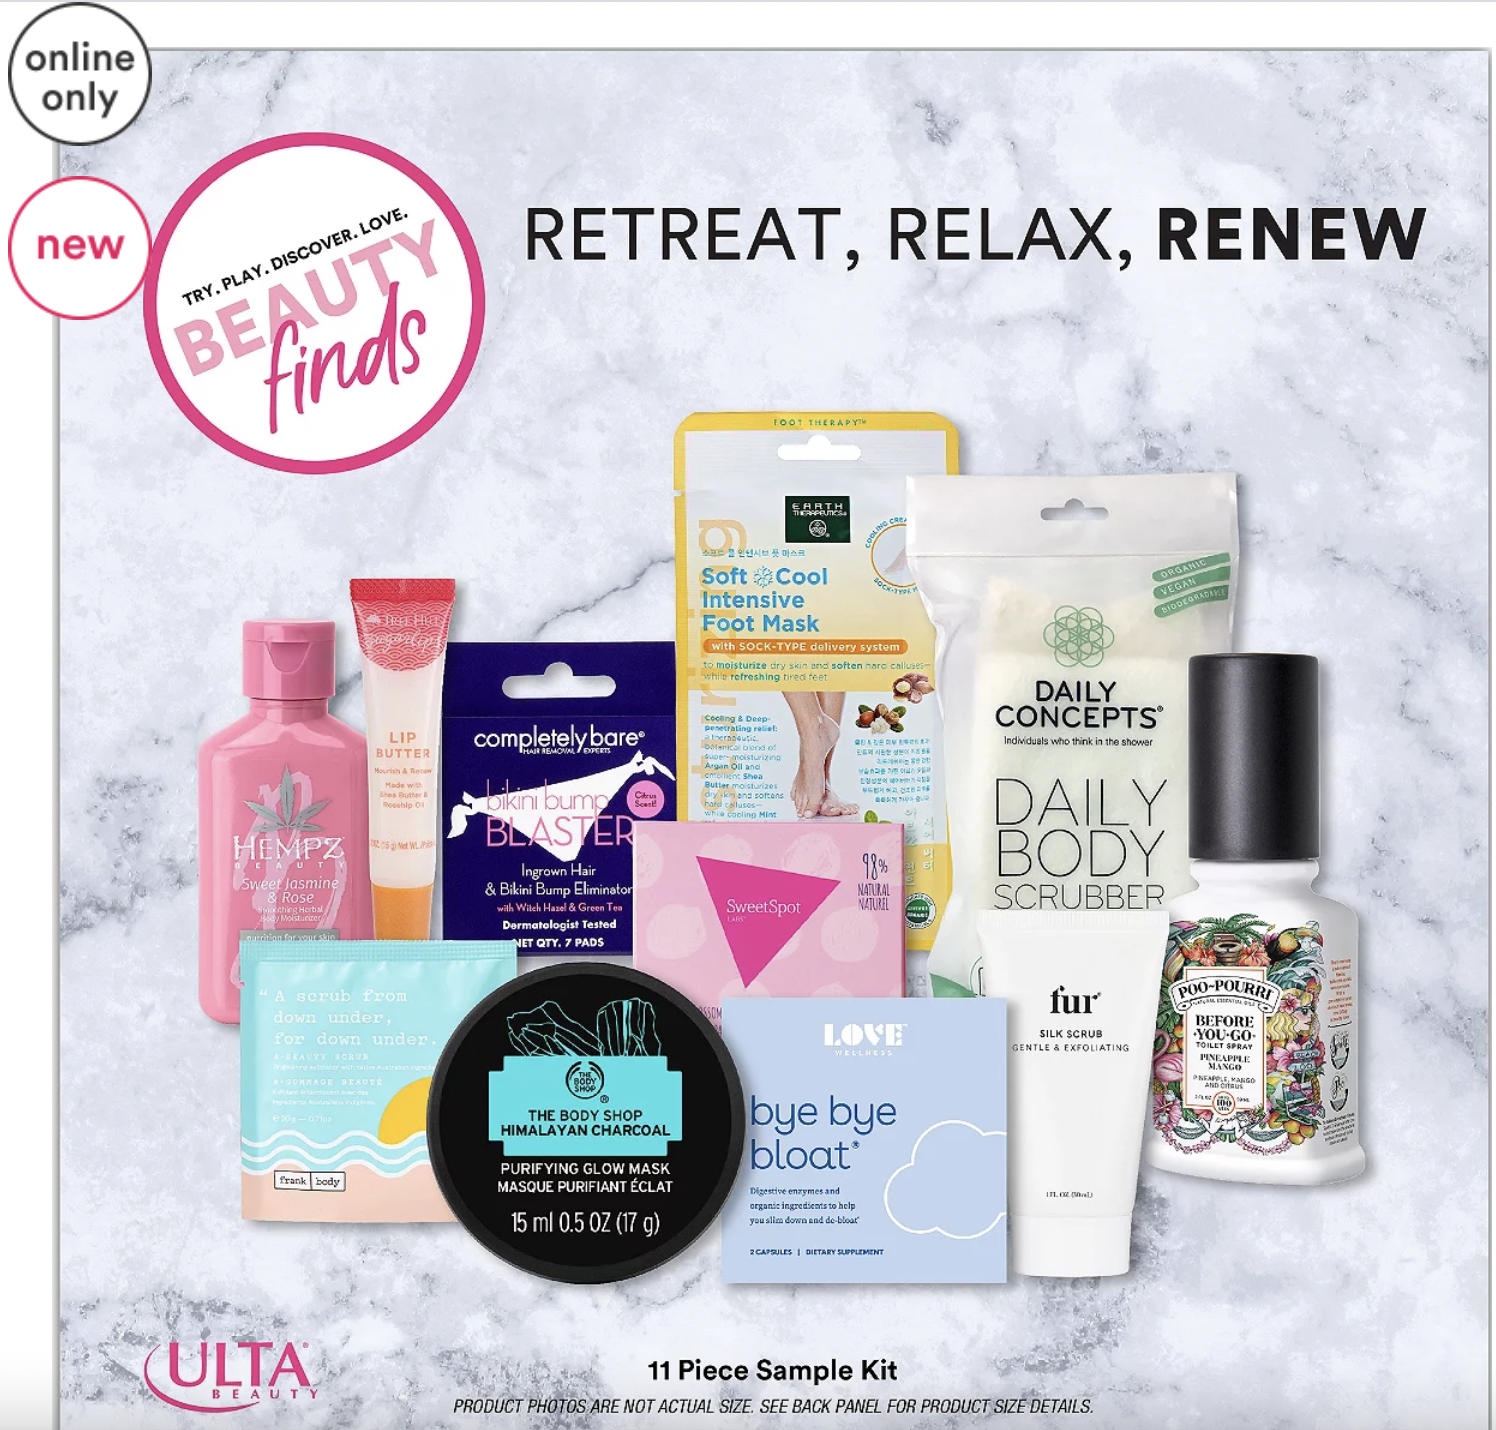 New Ulta Retreat, Relax, Renew Bathing Beauties Sampler Kit – Available Now